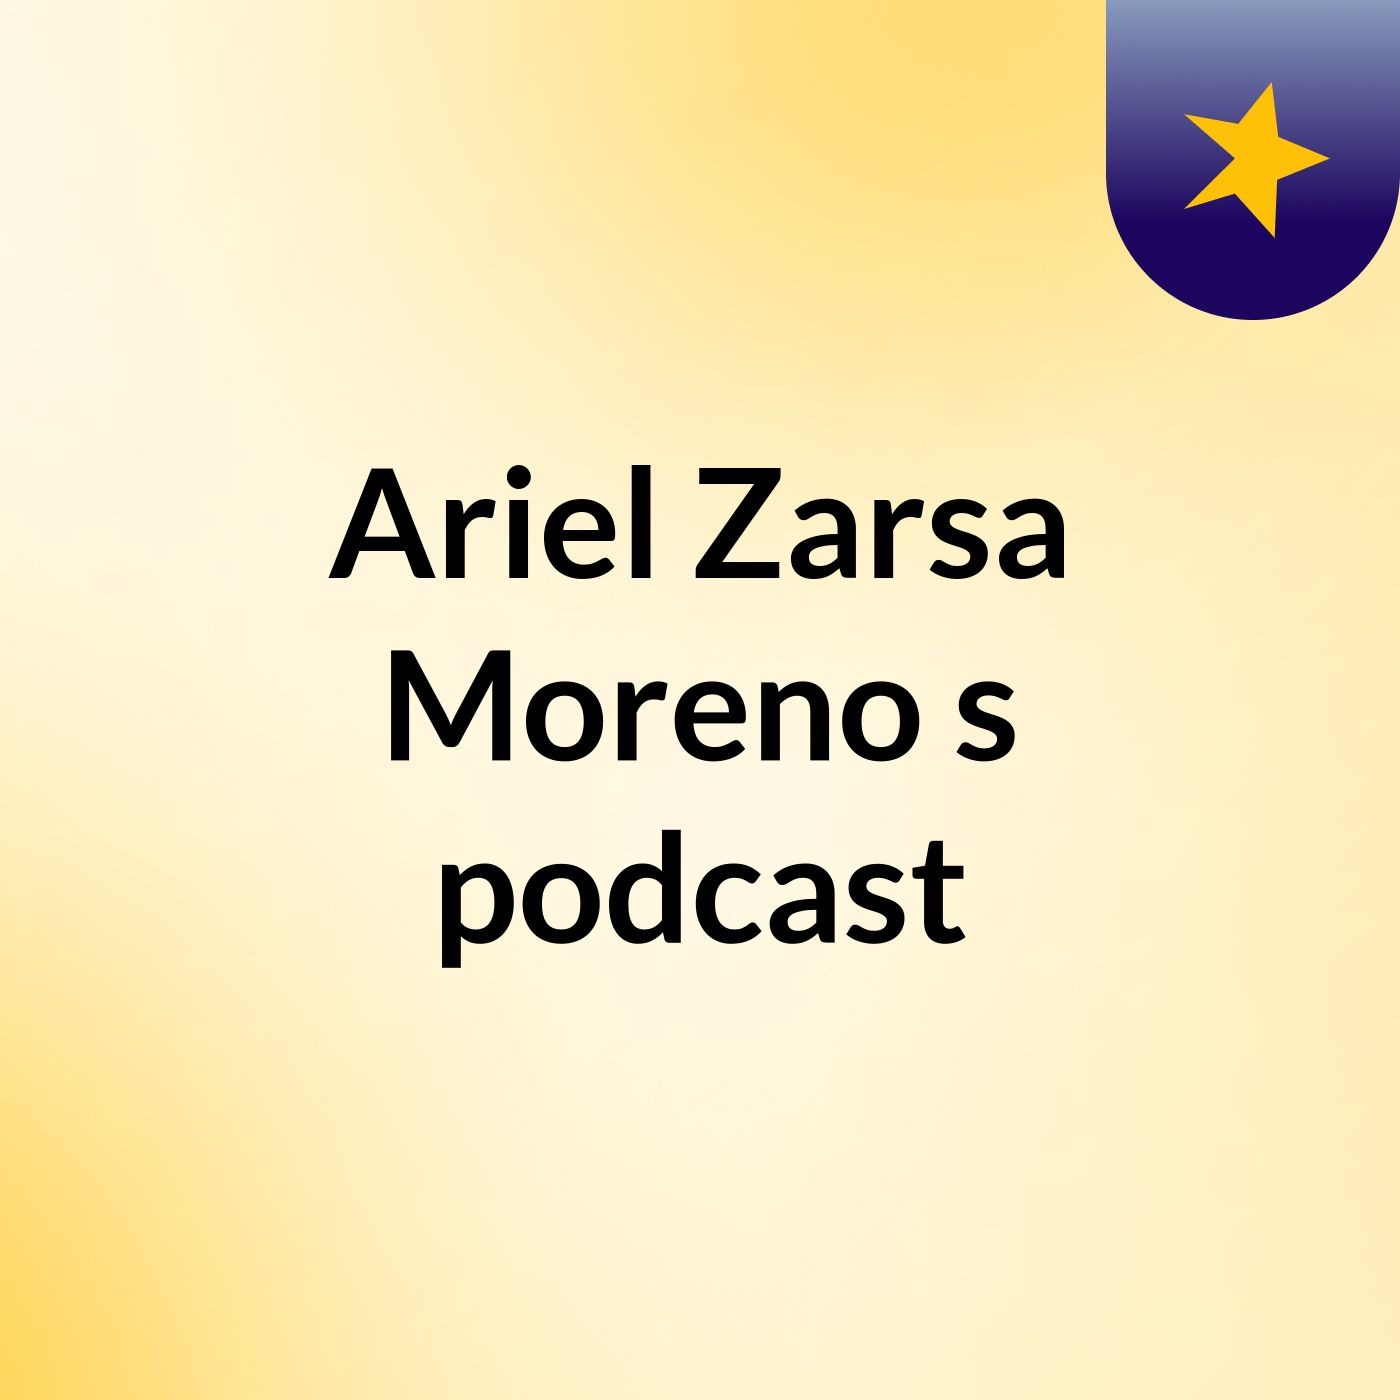 Ariel Zarsa Moreno's podcast